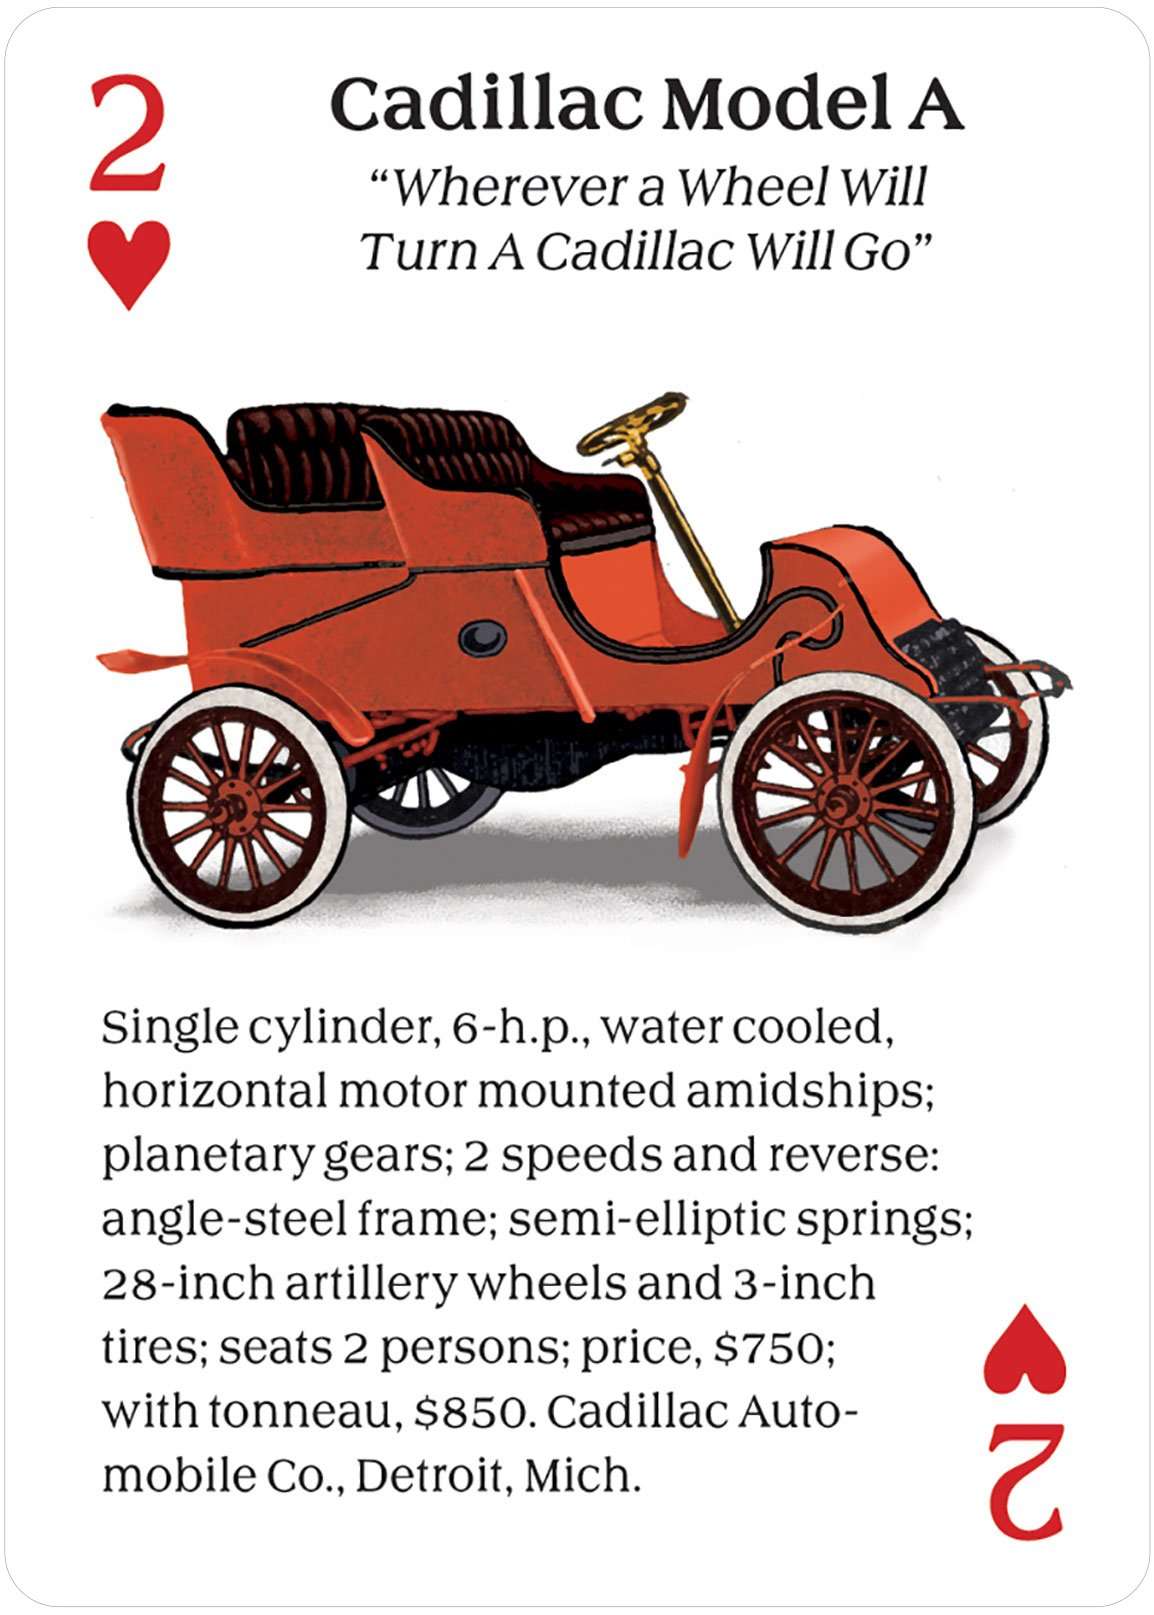 PlayingCardDecks.com-Turn of the Century Motor Cars Playing Cards USGS